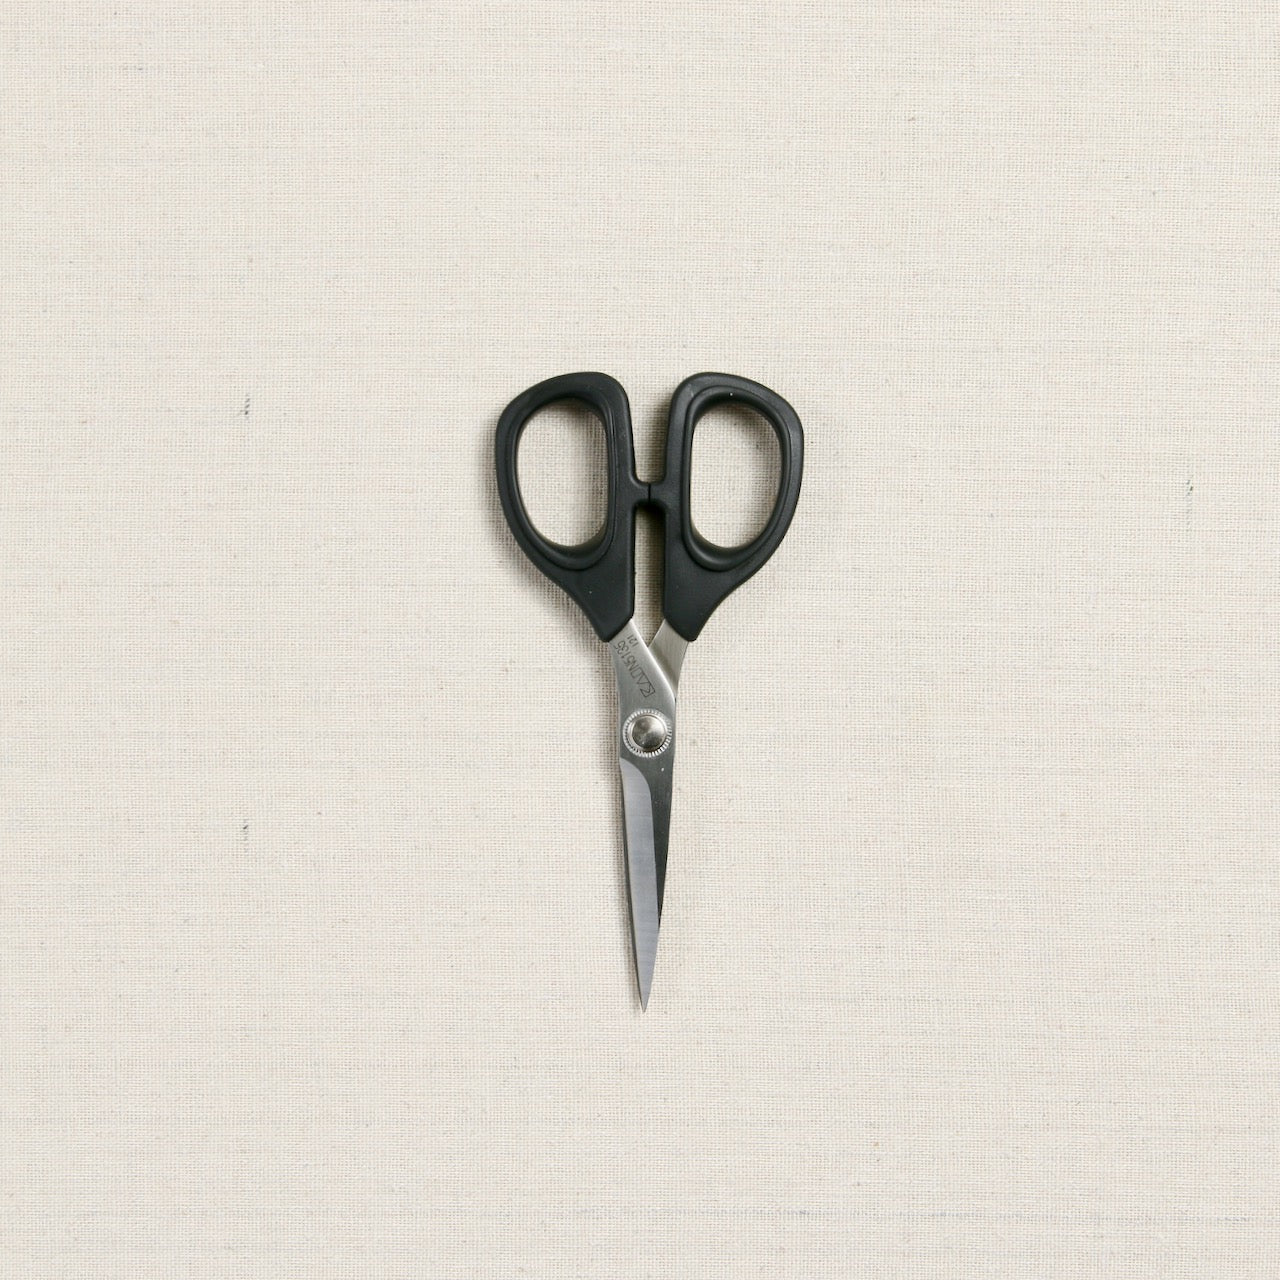 Kai 5.5 Embroidery Scissors - The Confident Stitch